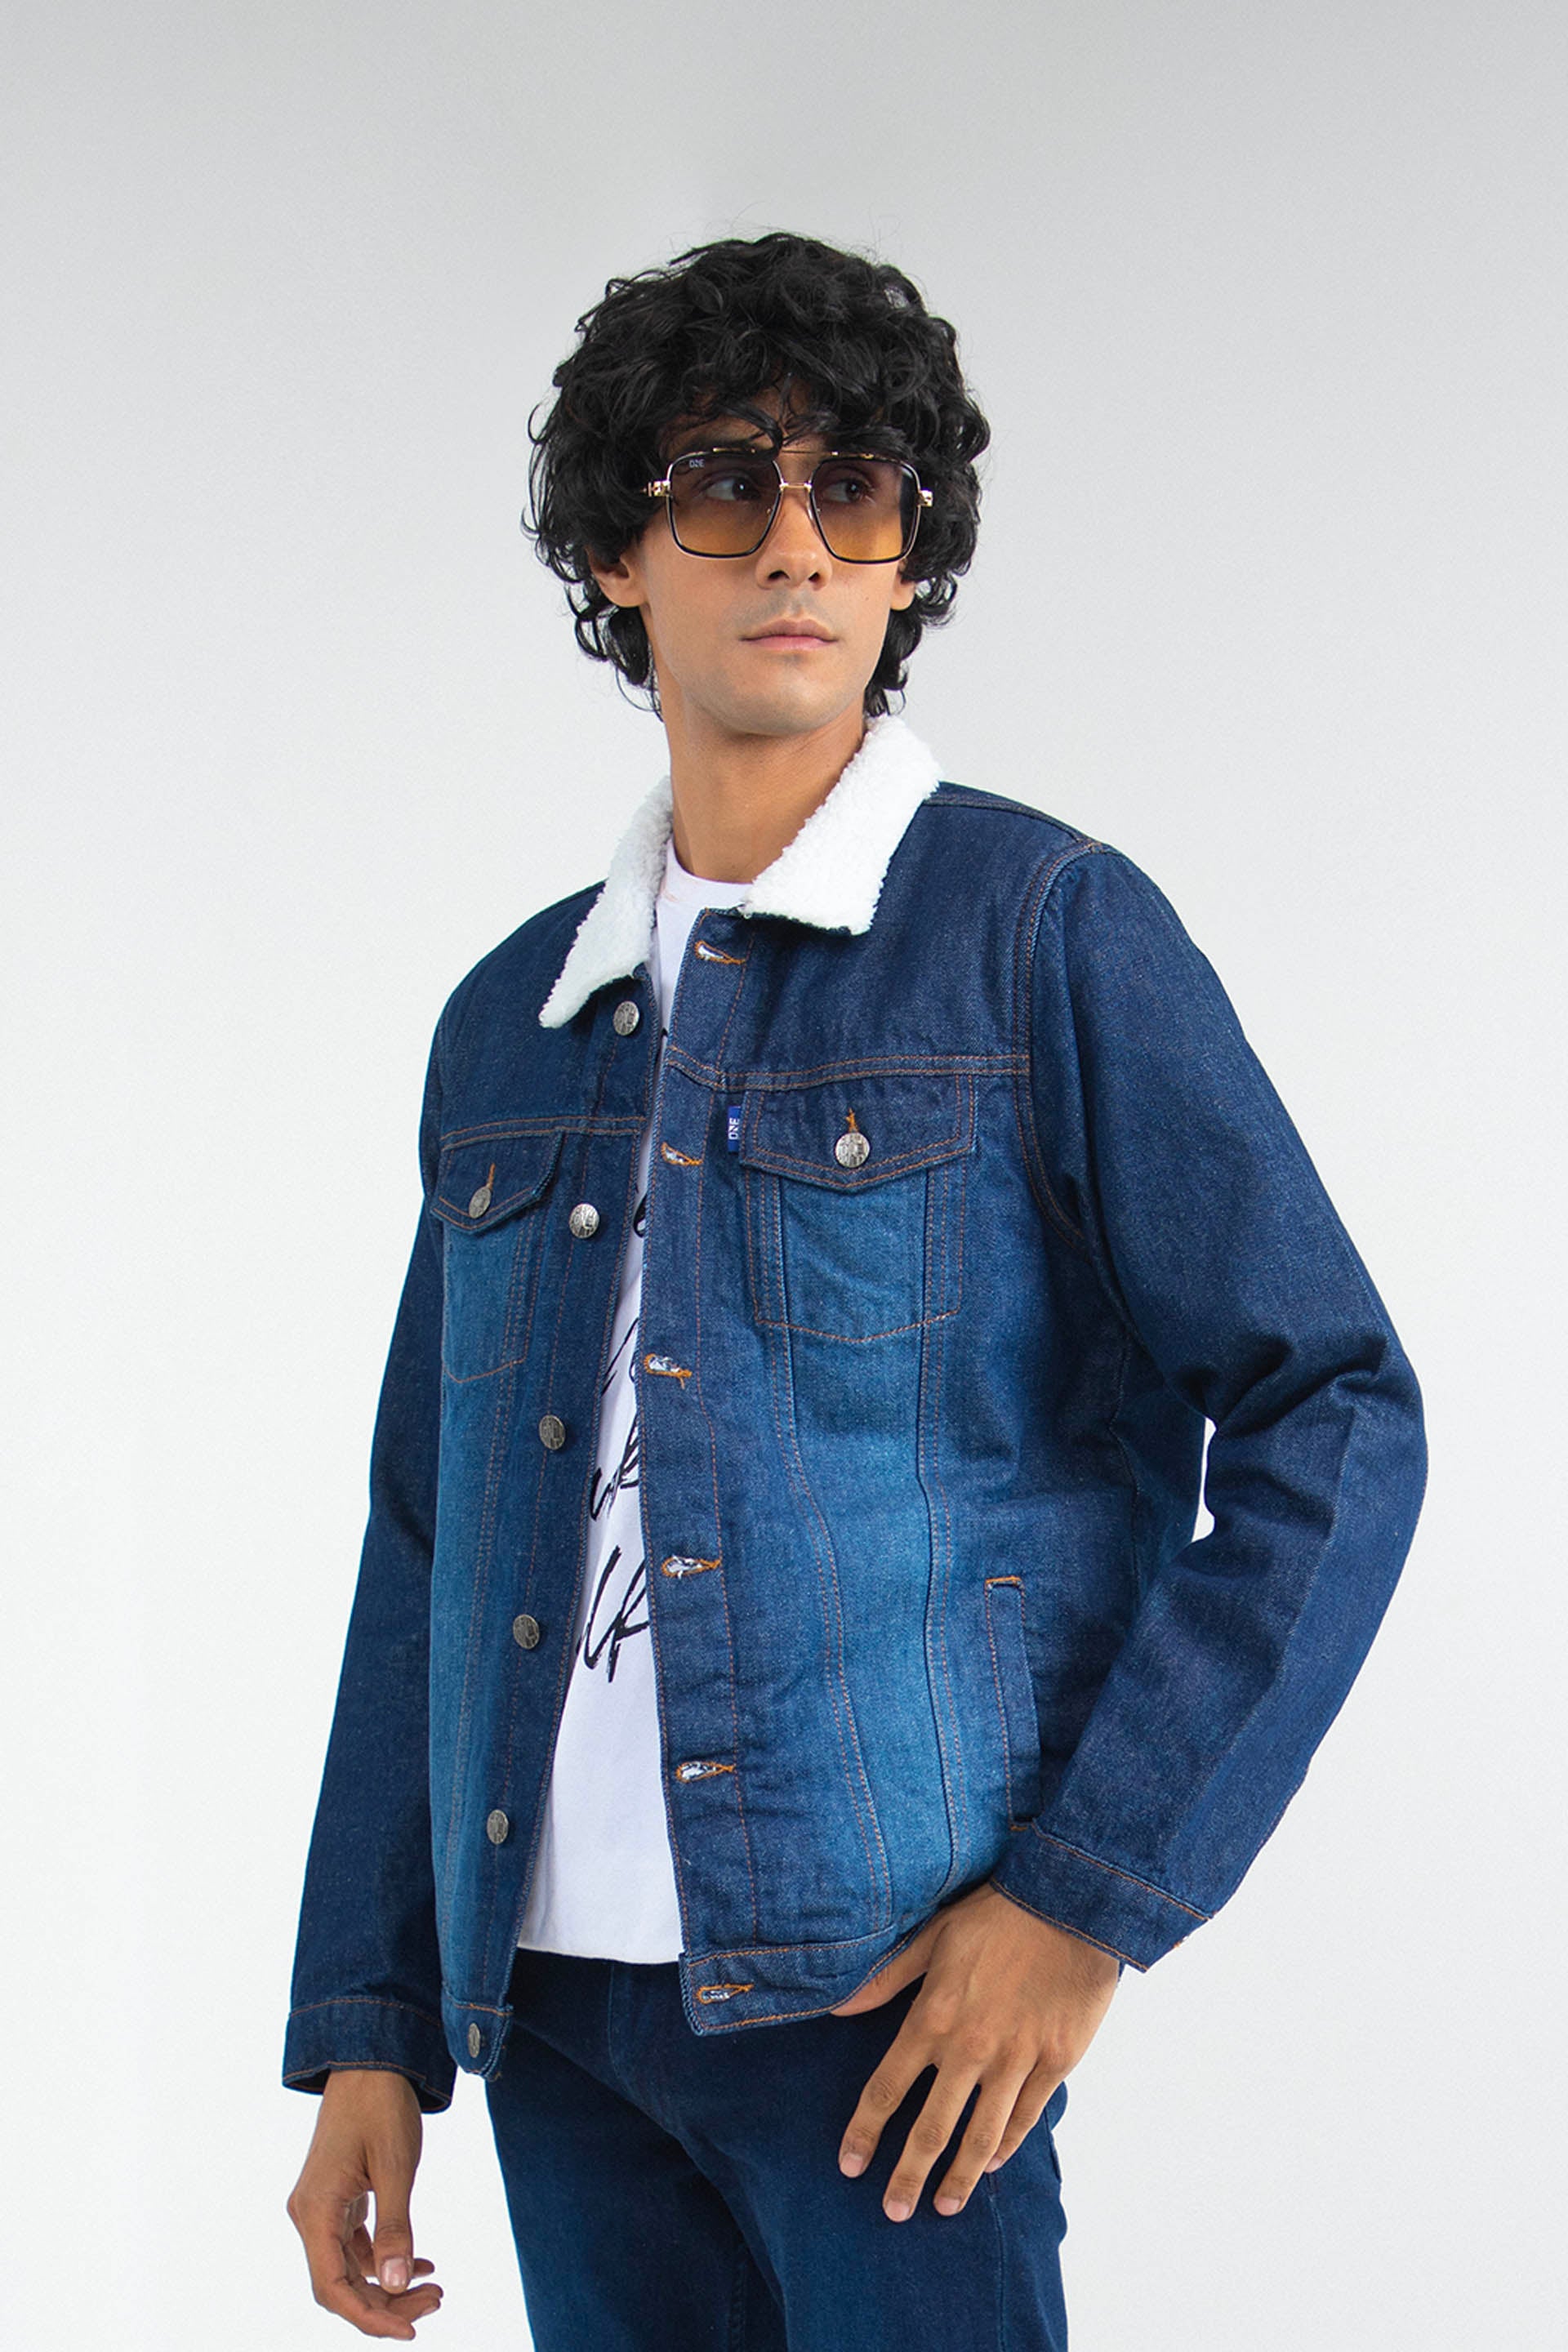 Boys Denim Jackets - Buy Trendy Denim Jacket Online for Boys in India